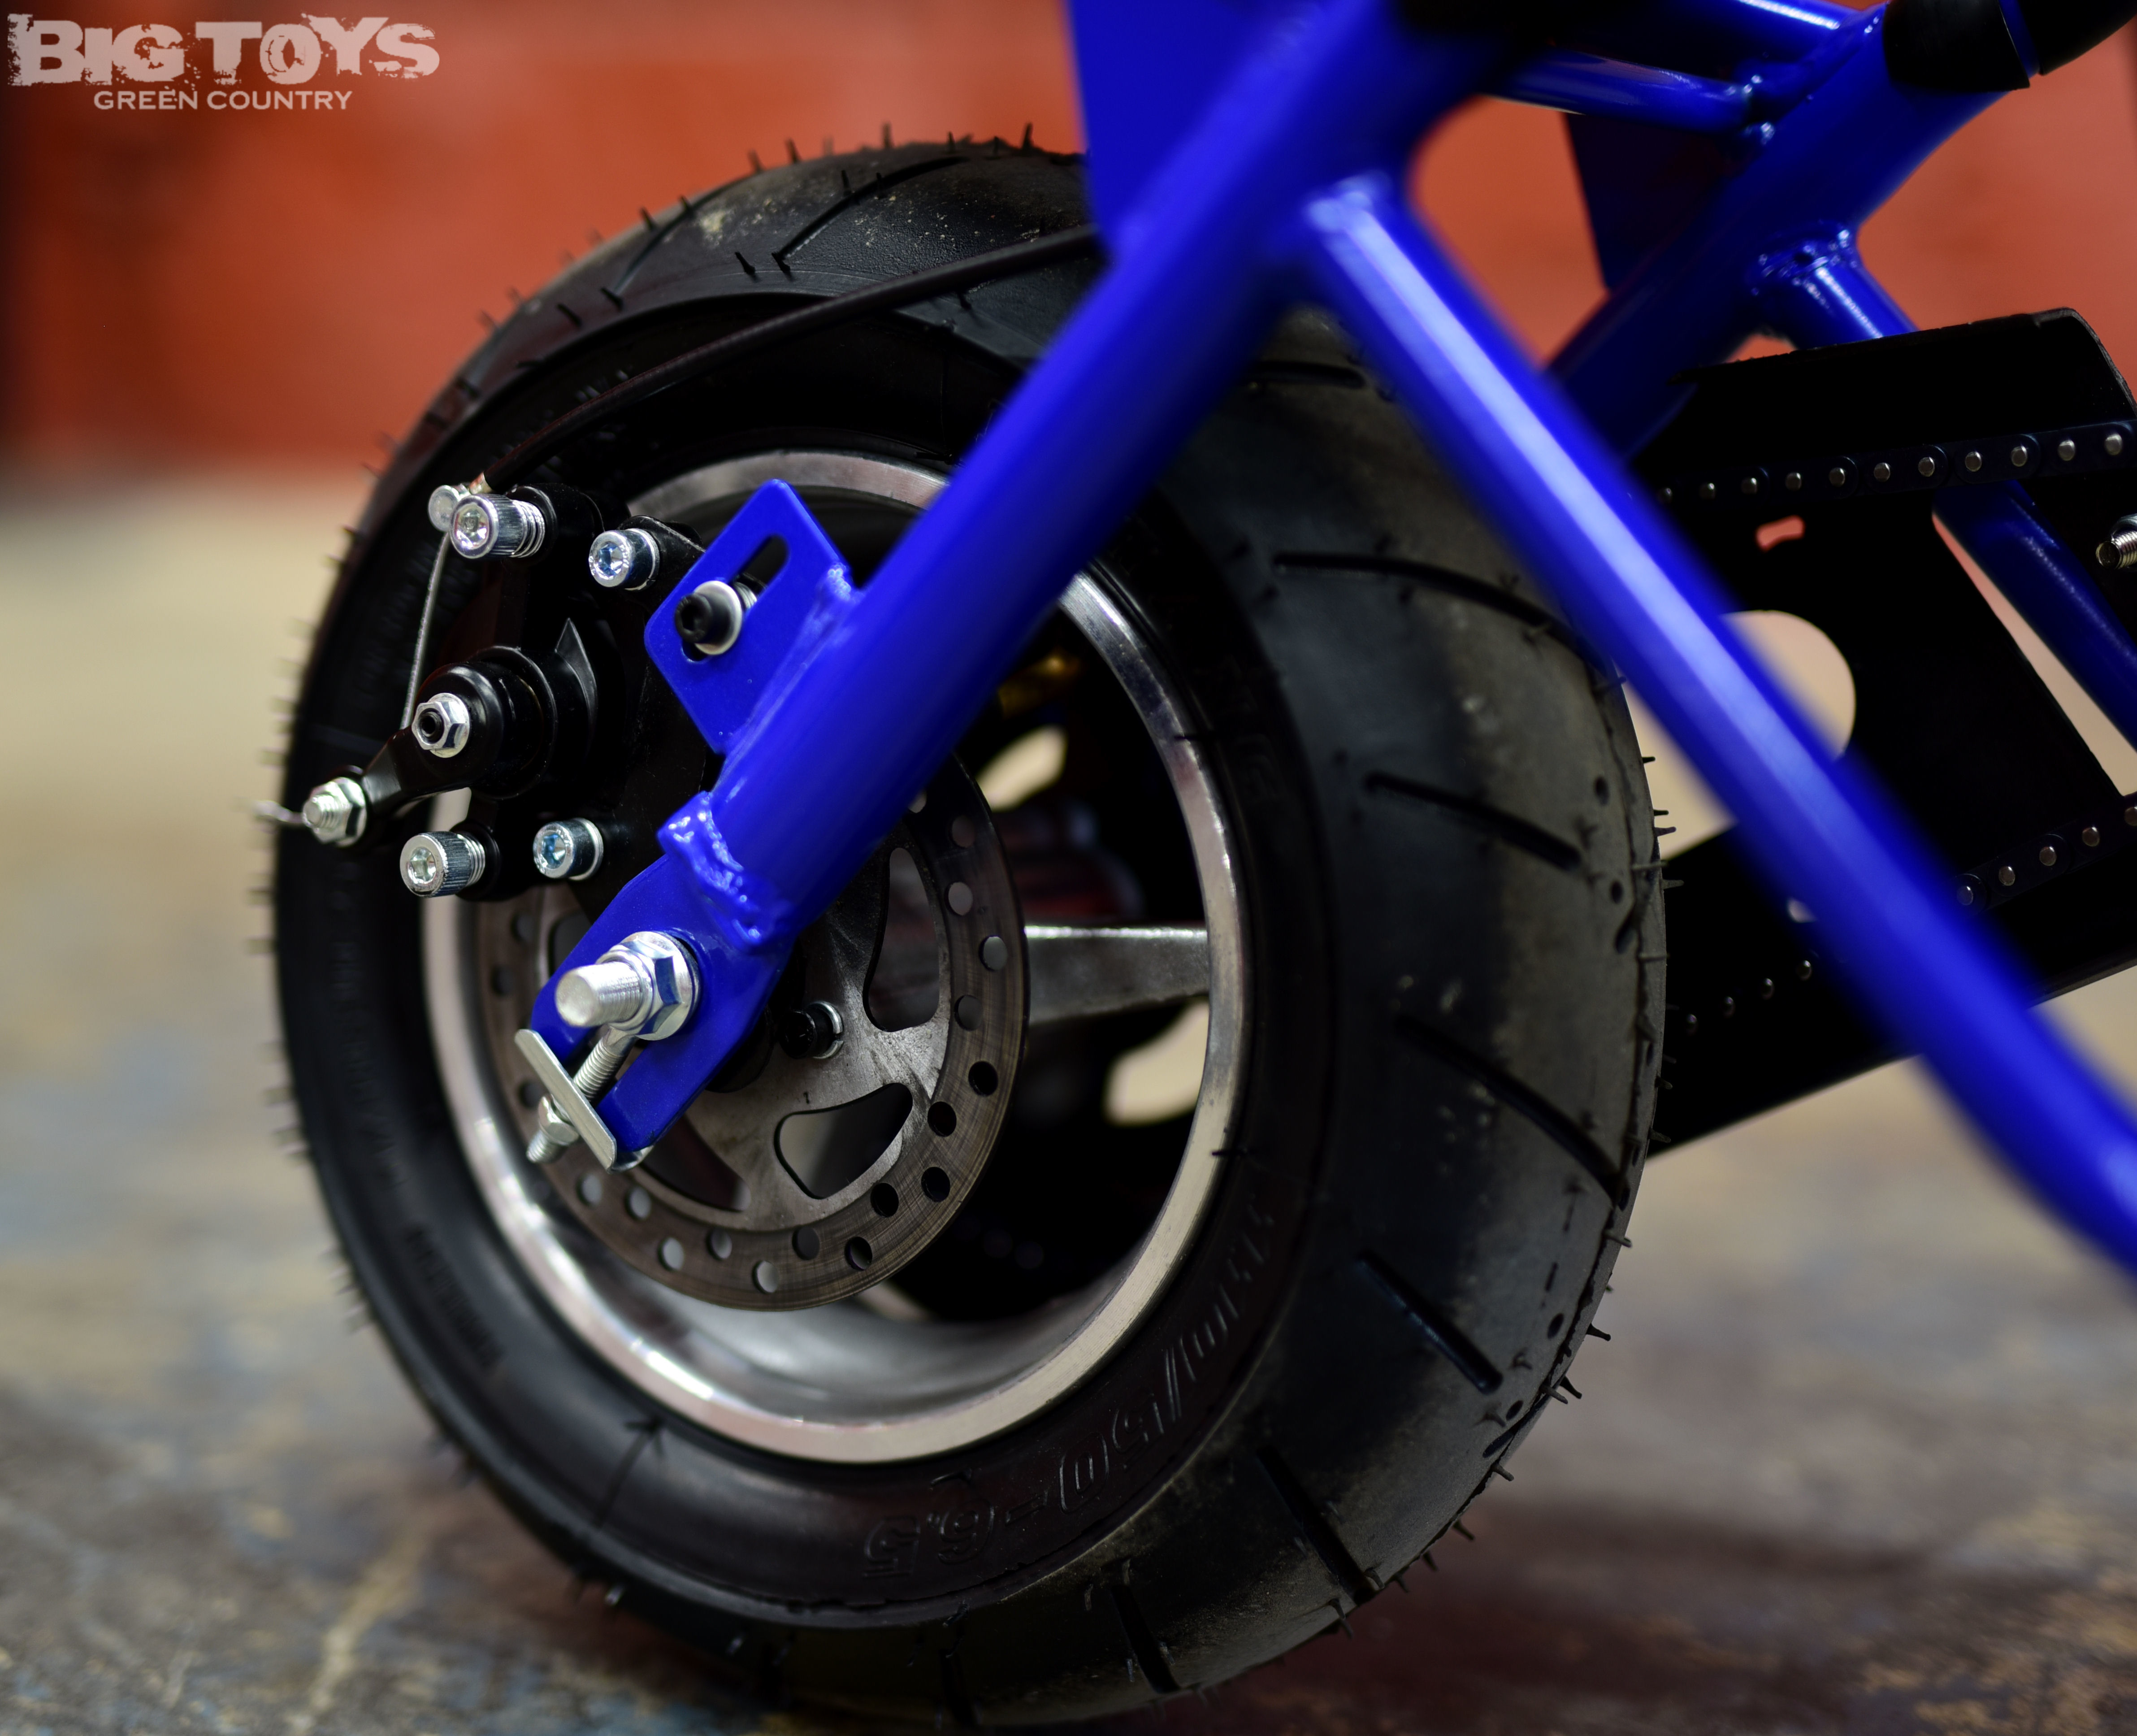 Fast Kids Mini Bike Chopper Motorcycle 49cc Gas - Black - Big Toys